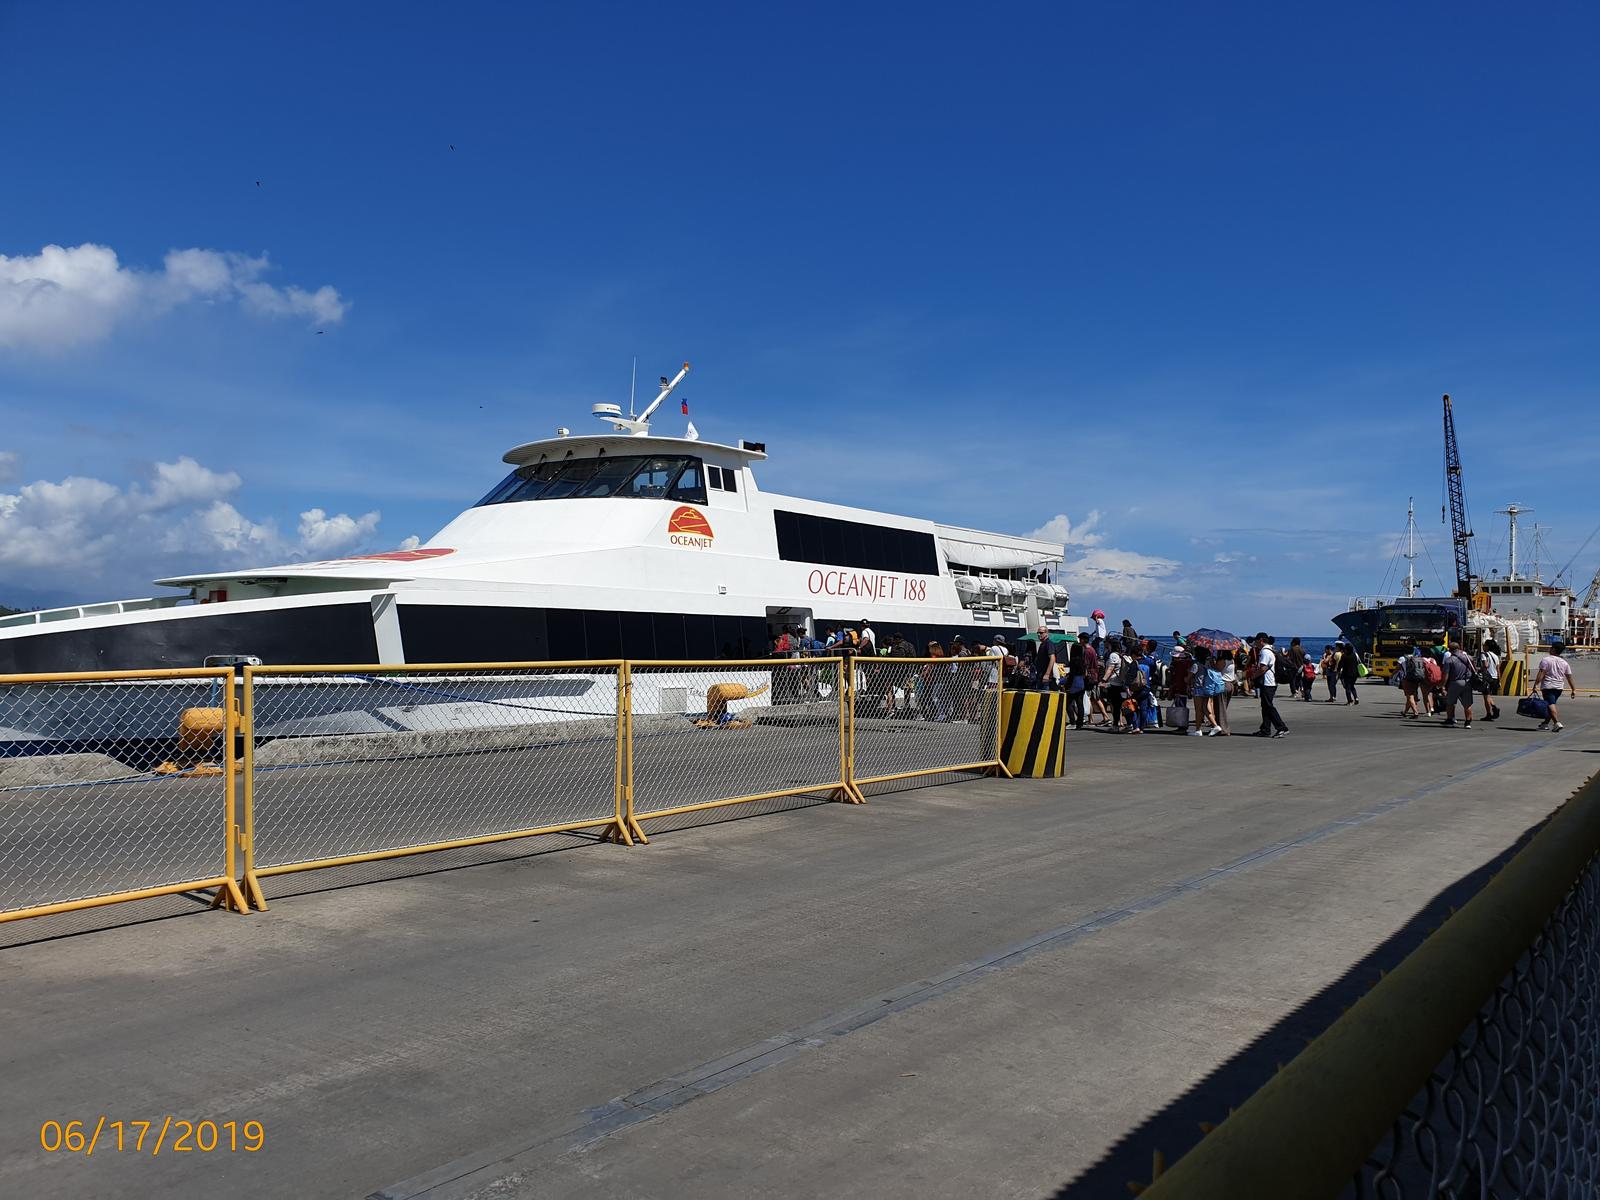 Day 08 - Transfer from Malapascua to Bohol